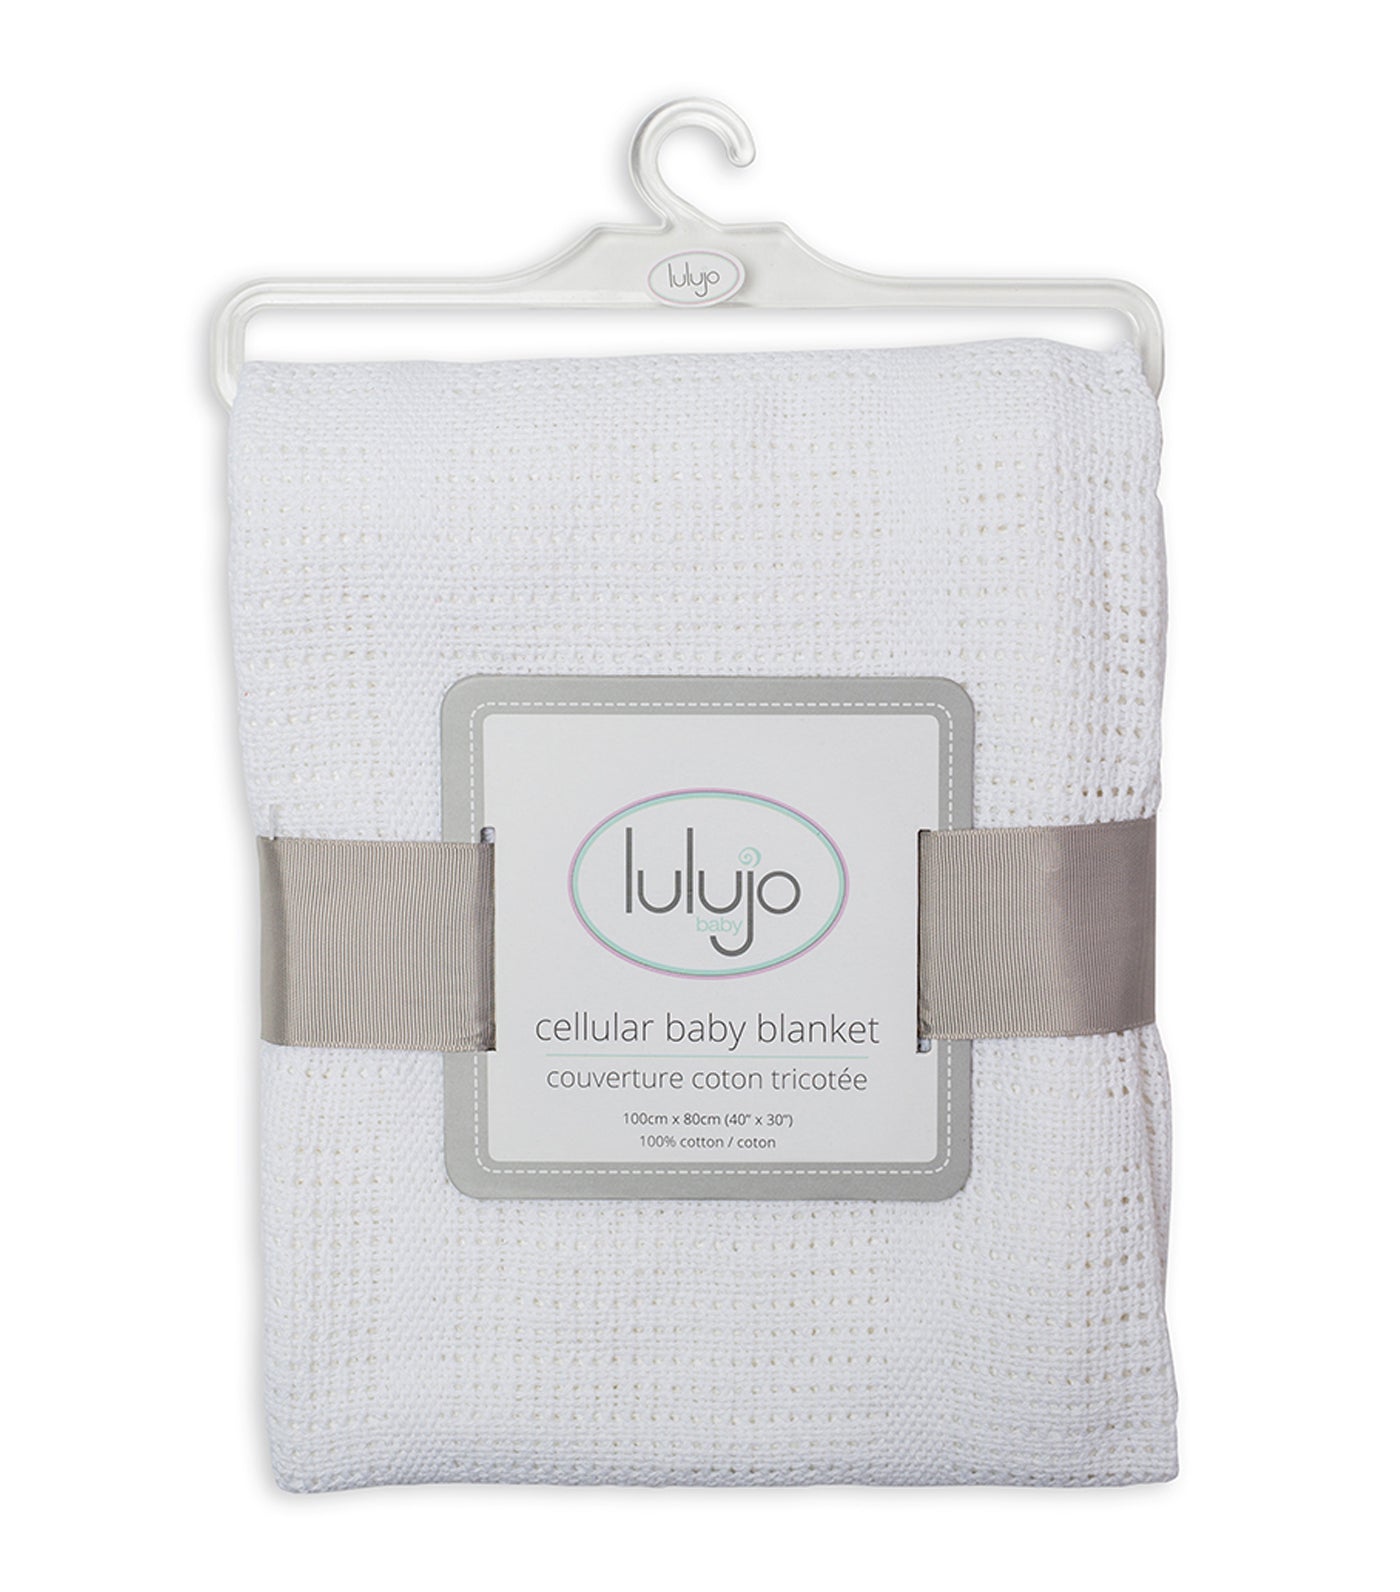 lulujo white cellular cotton baby blanket